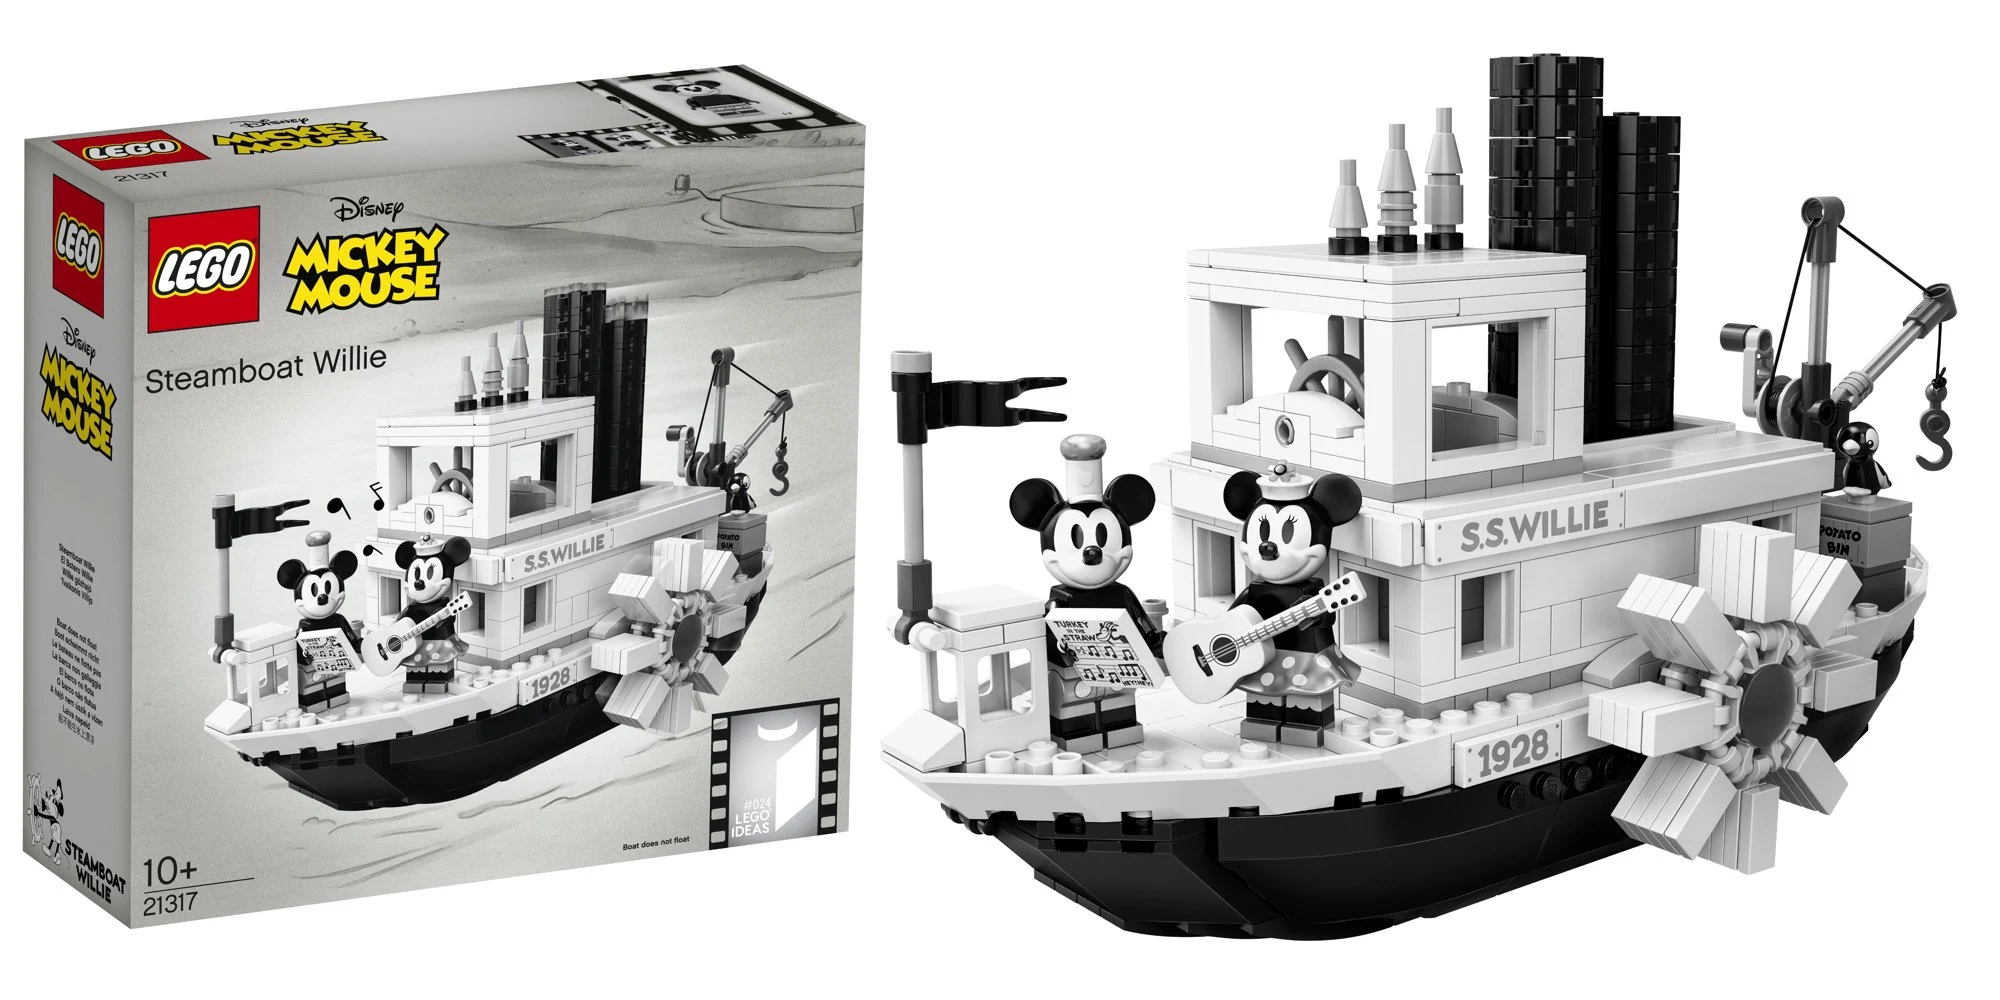 Best LEGO Disney sets - Steamboat Willie